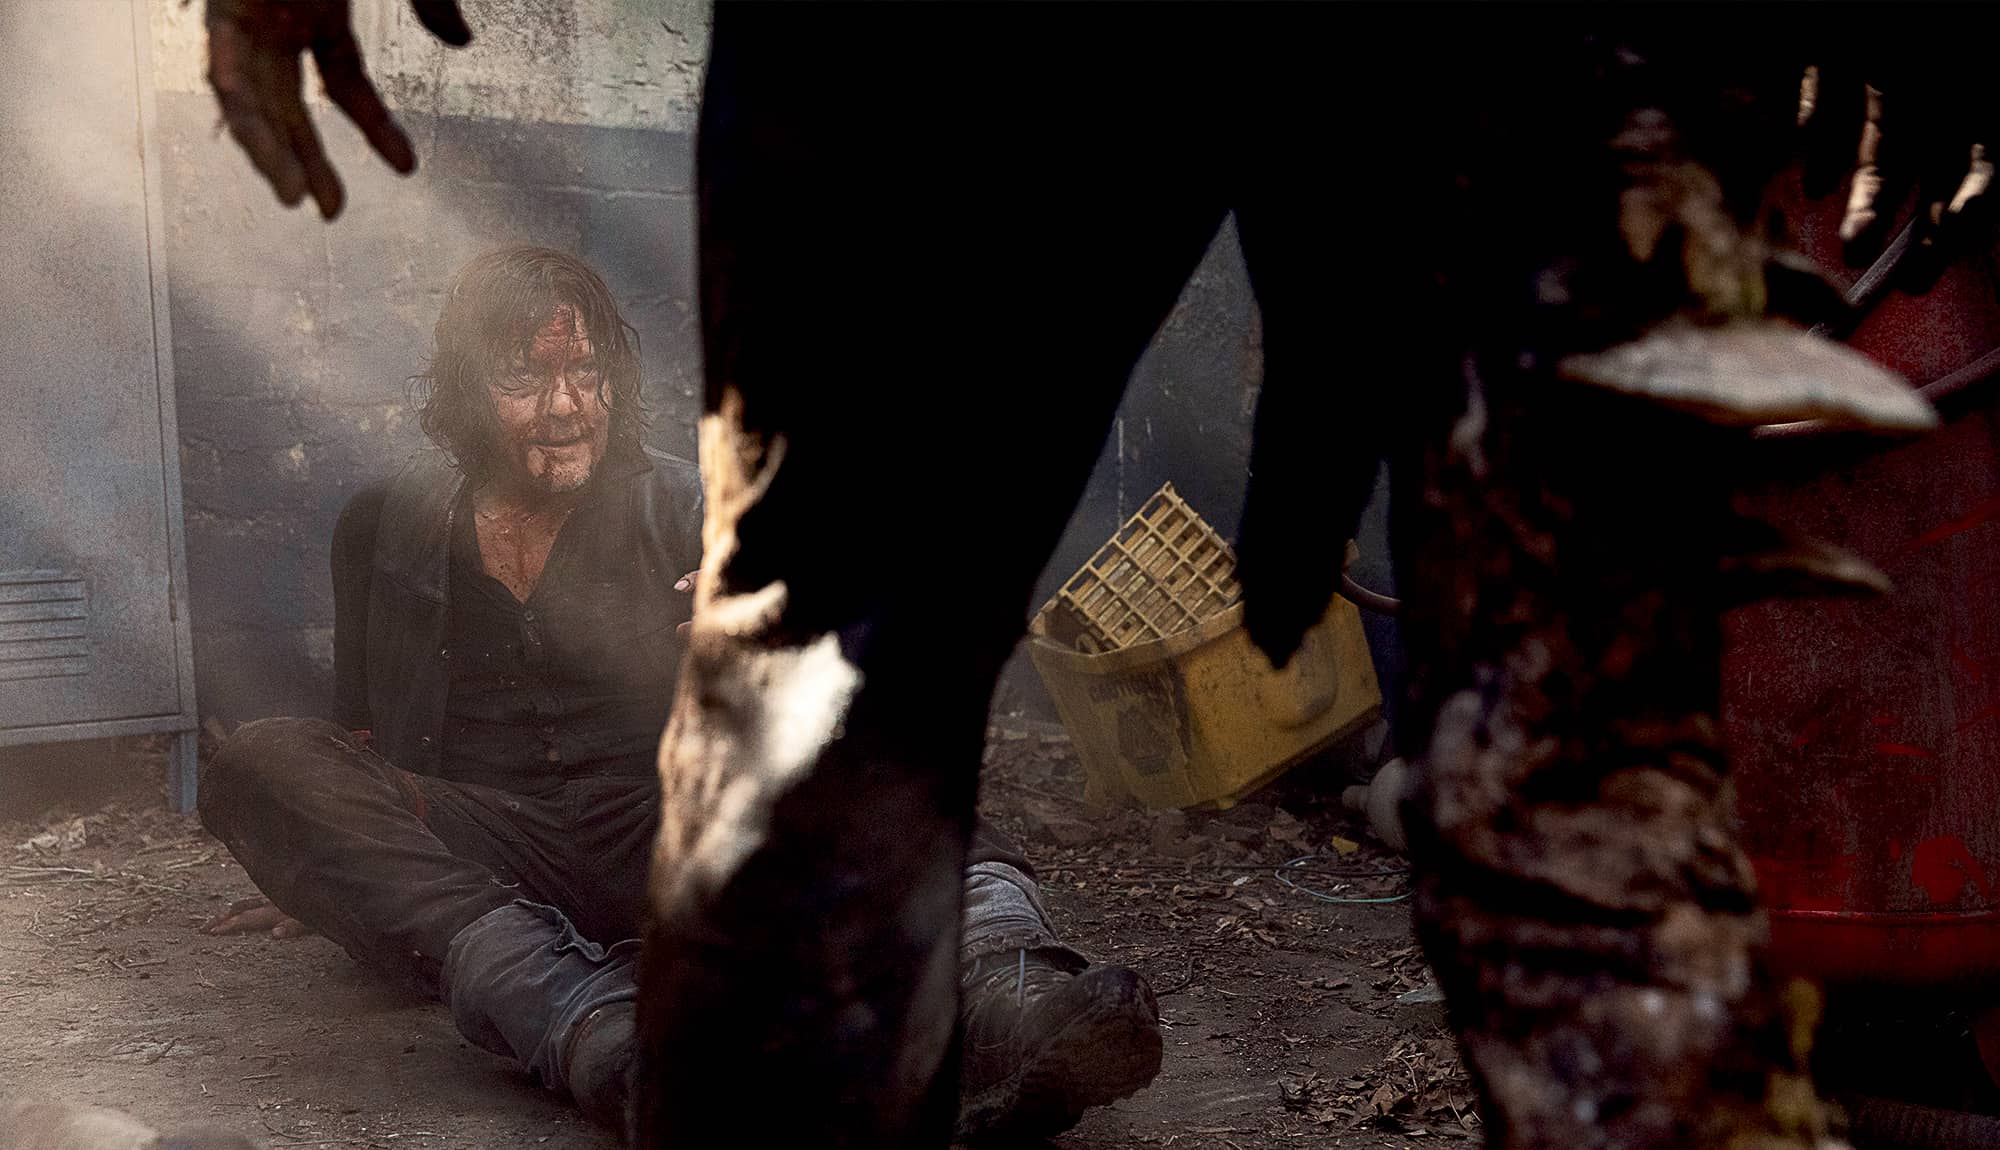 The Best Images From The Walking Dead Episode 1010: “Stalker”